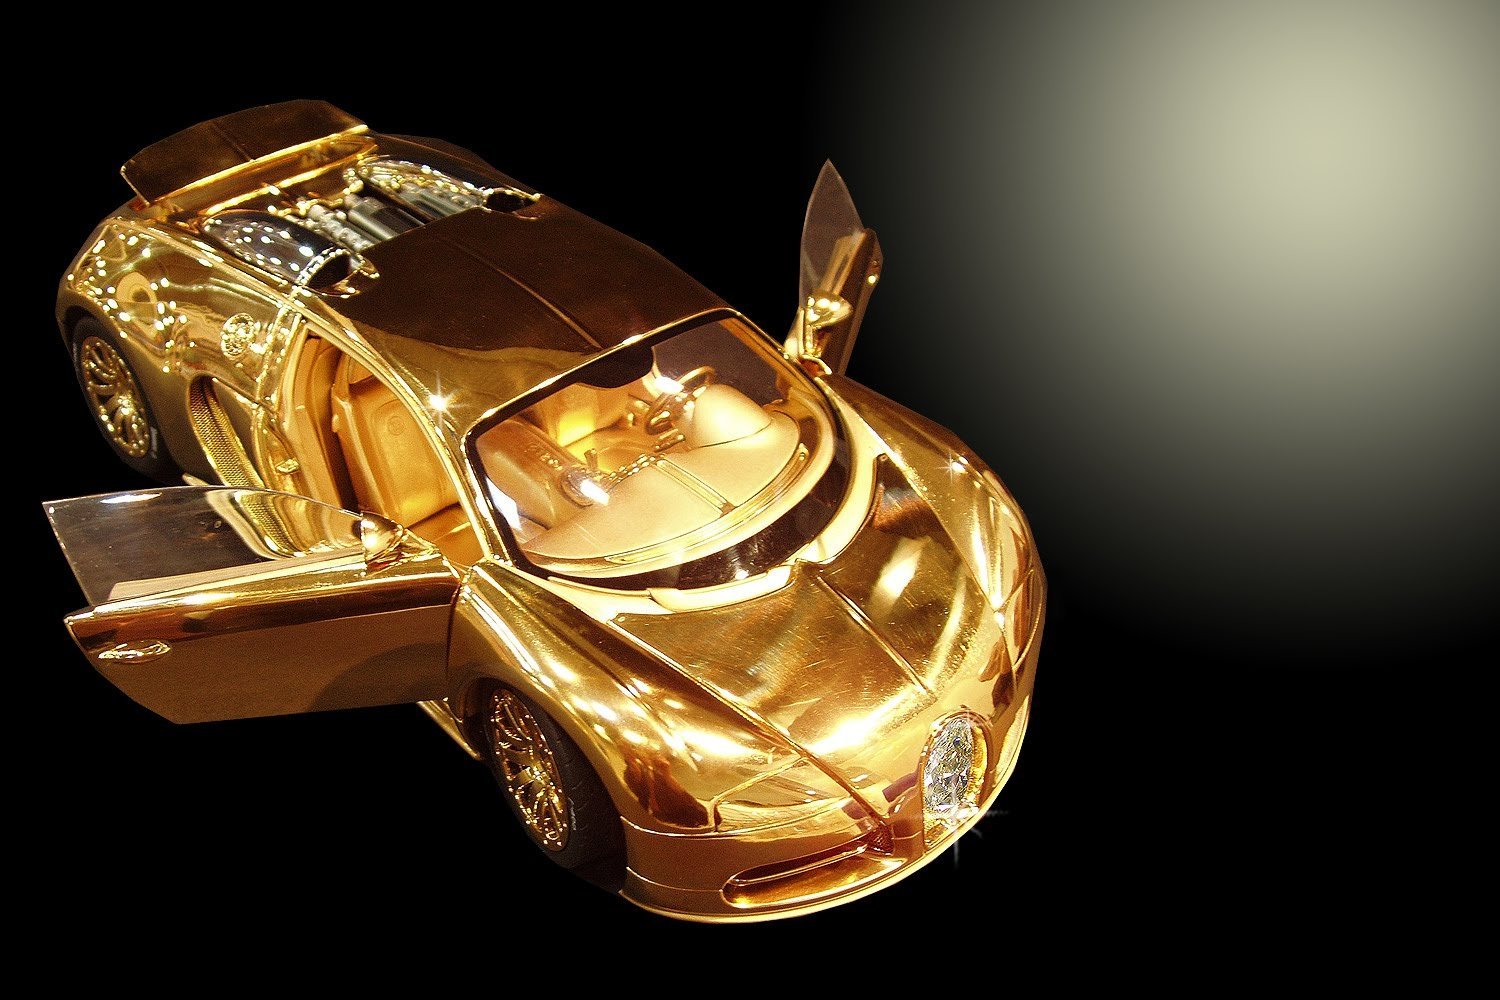 Золотая Бугатти. Автомобиль Bugatti Veyron Diamond Ltd золото. Бугатти Вейрон золотой. Золотой машинка игрушка Бугатти. Expensive gold